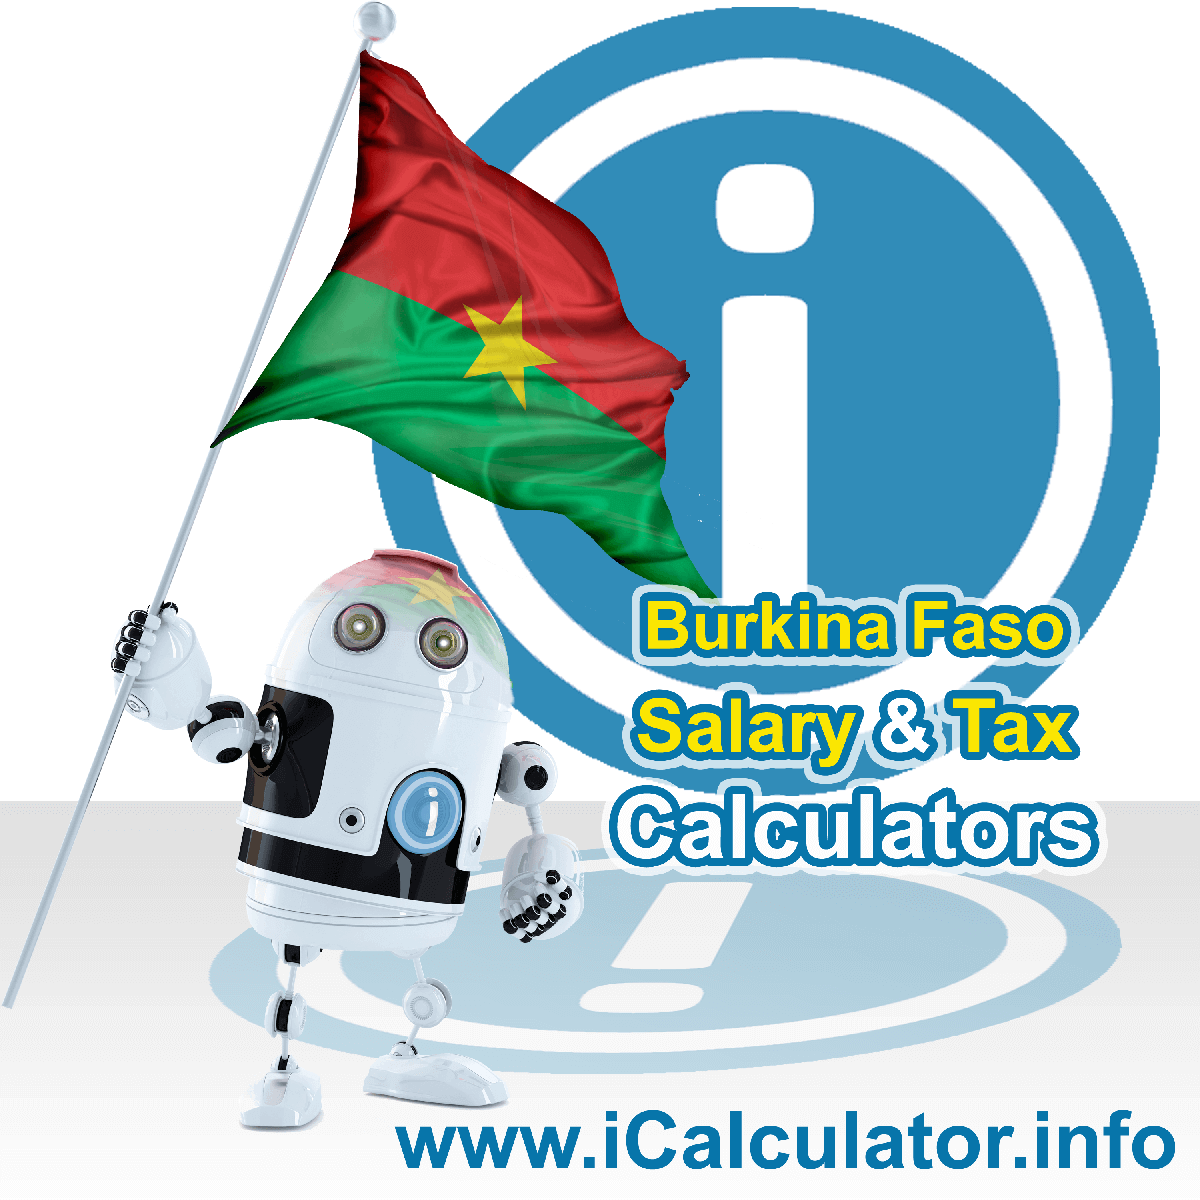 Burkina Faso Salary Calculator. This image shows the Burkina Fasoese flag and information relating to the tax formula for the Burkina Faso Tax Calculator